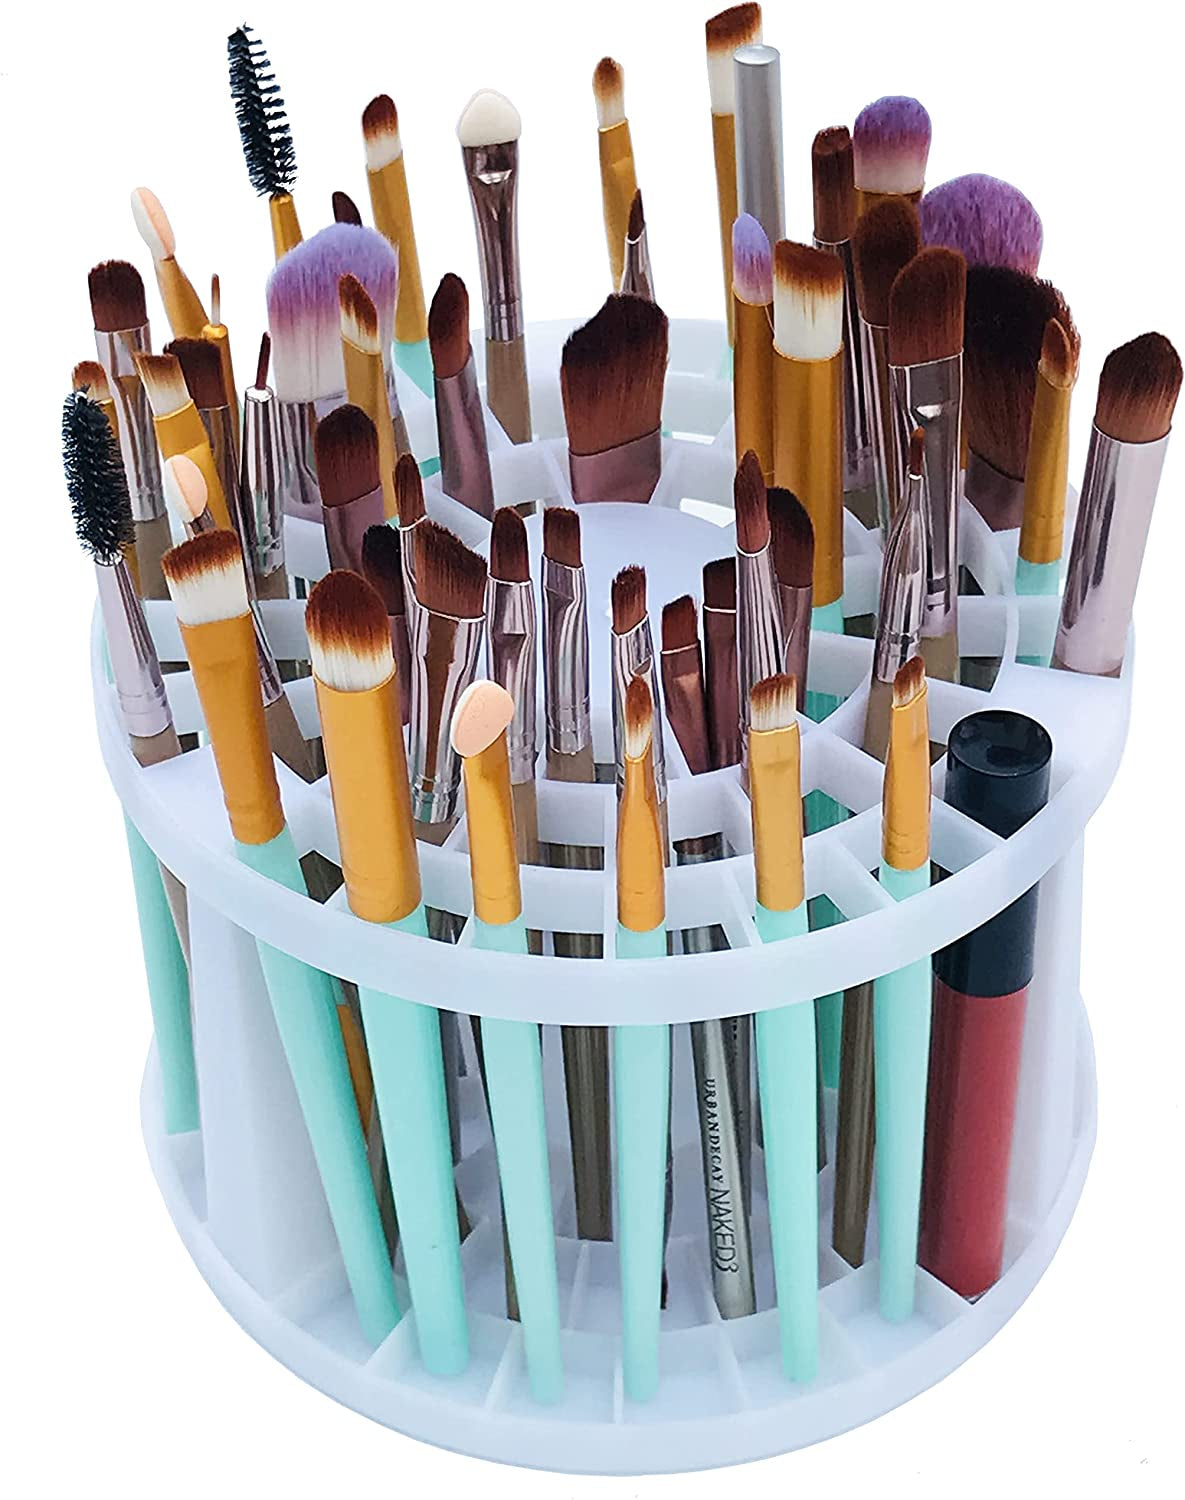 Makeup & Artist Paint Brush Holder 49 Hole Plastic Desk Stand Holding Rack for Pens, Pencils, Eyeliner, Cosmetic Brushes Crate Storage Organizer White